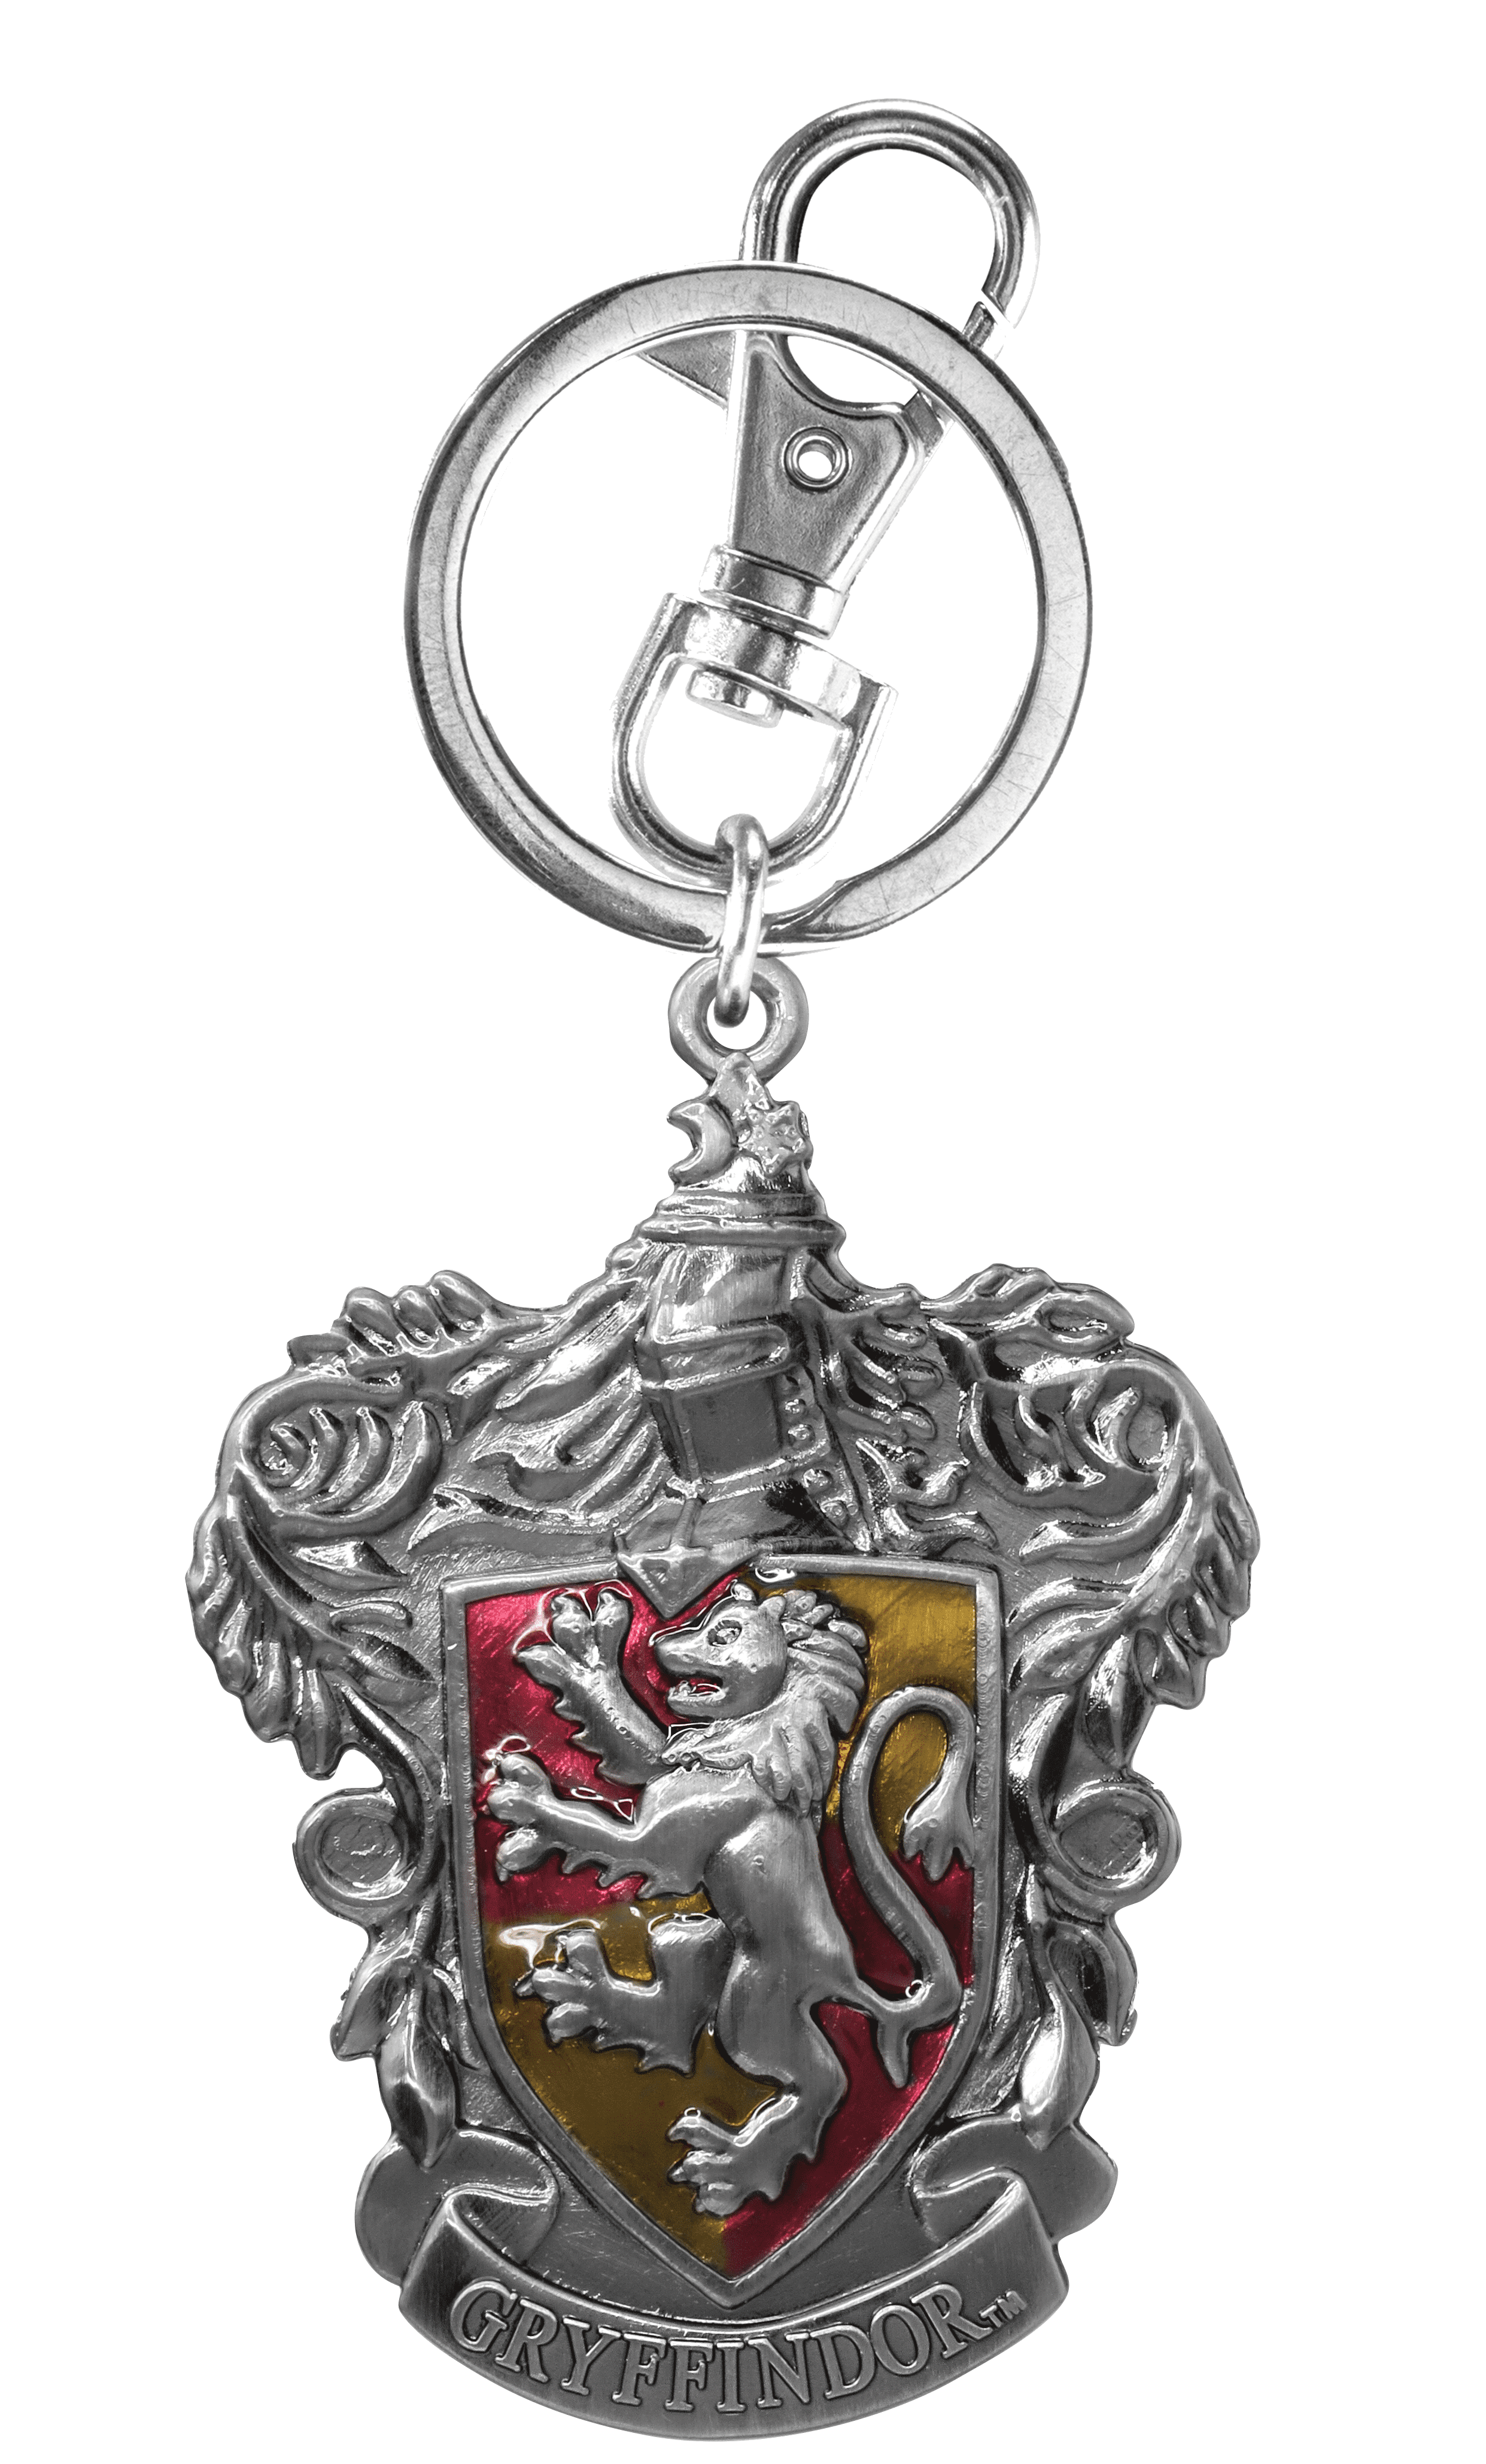 Harry Potter Hogwarts Crest Keyring Keychain Snitch Magical HP Hogwarts Official 